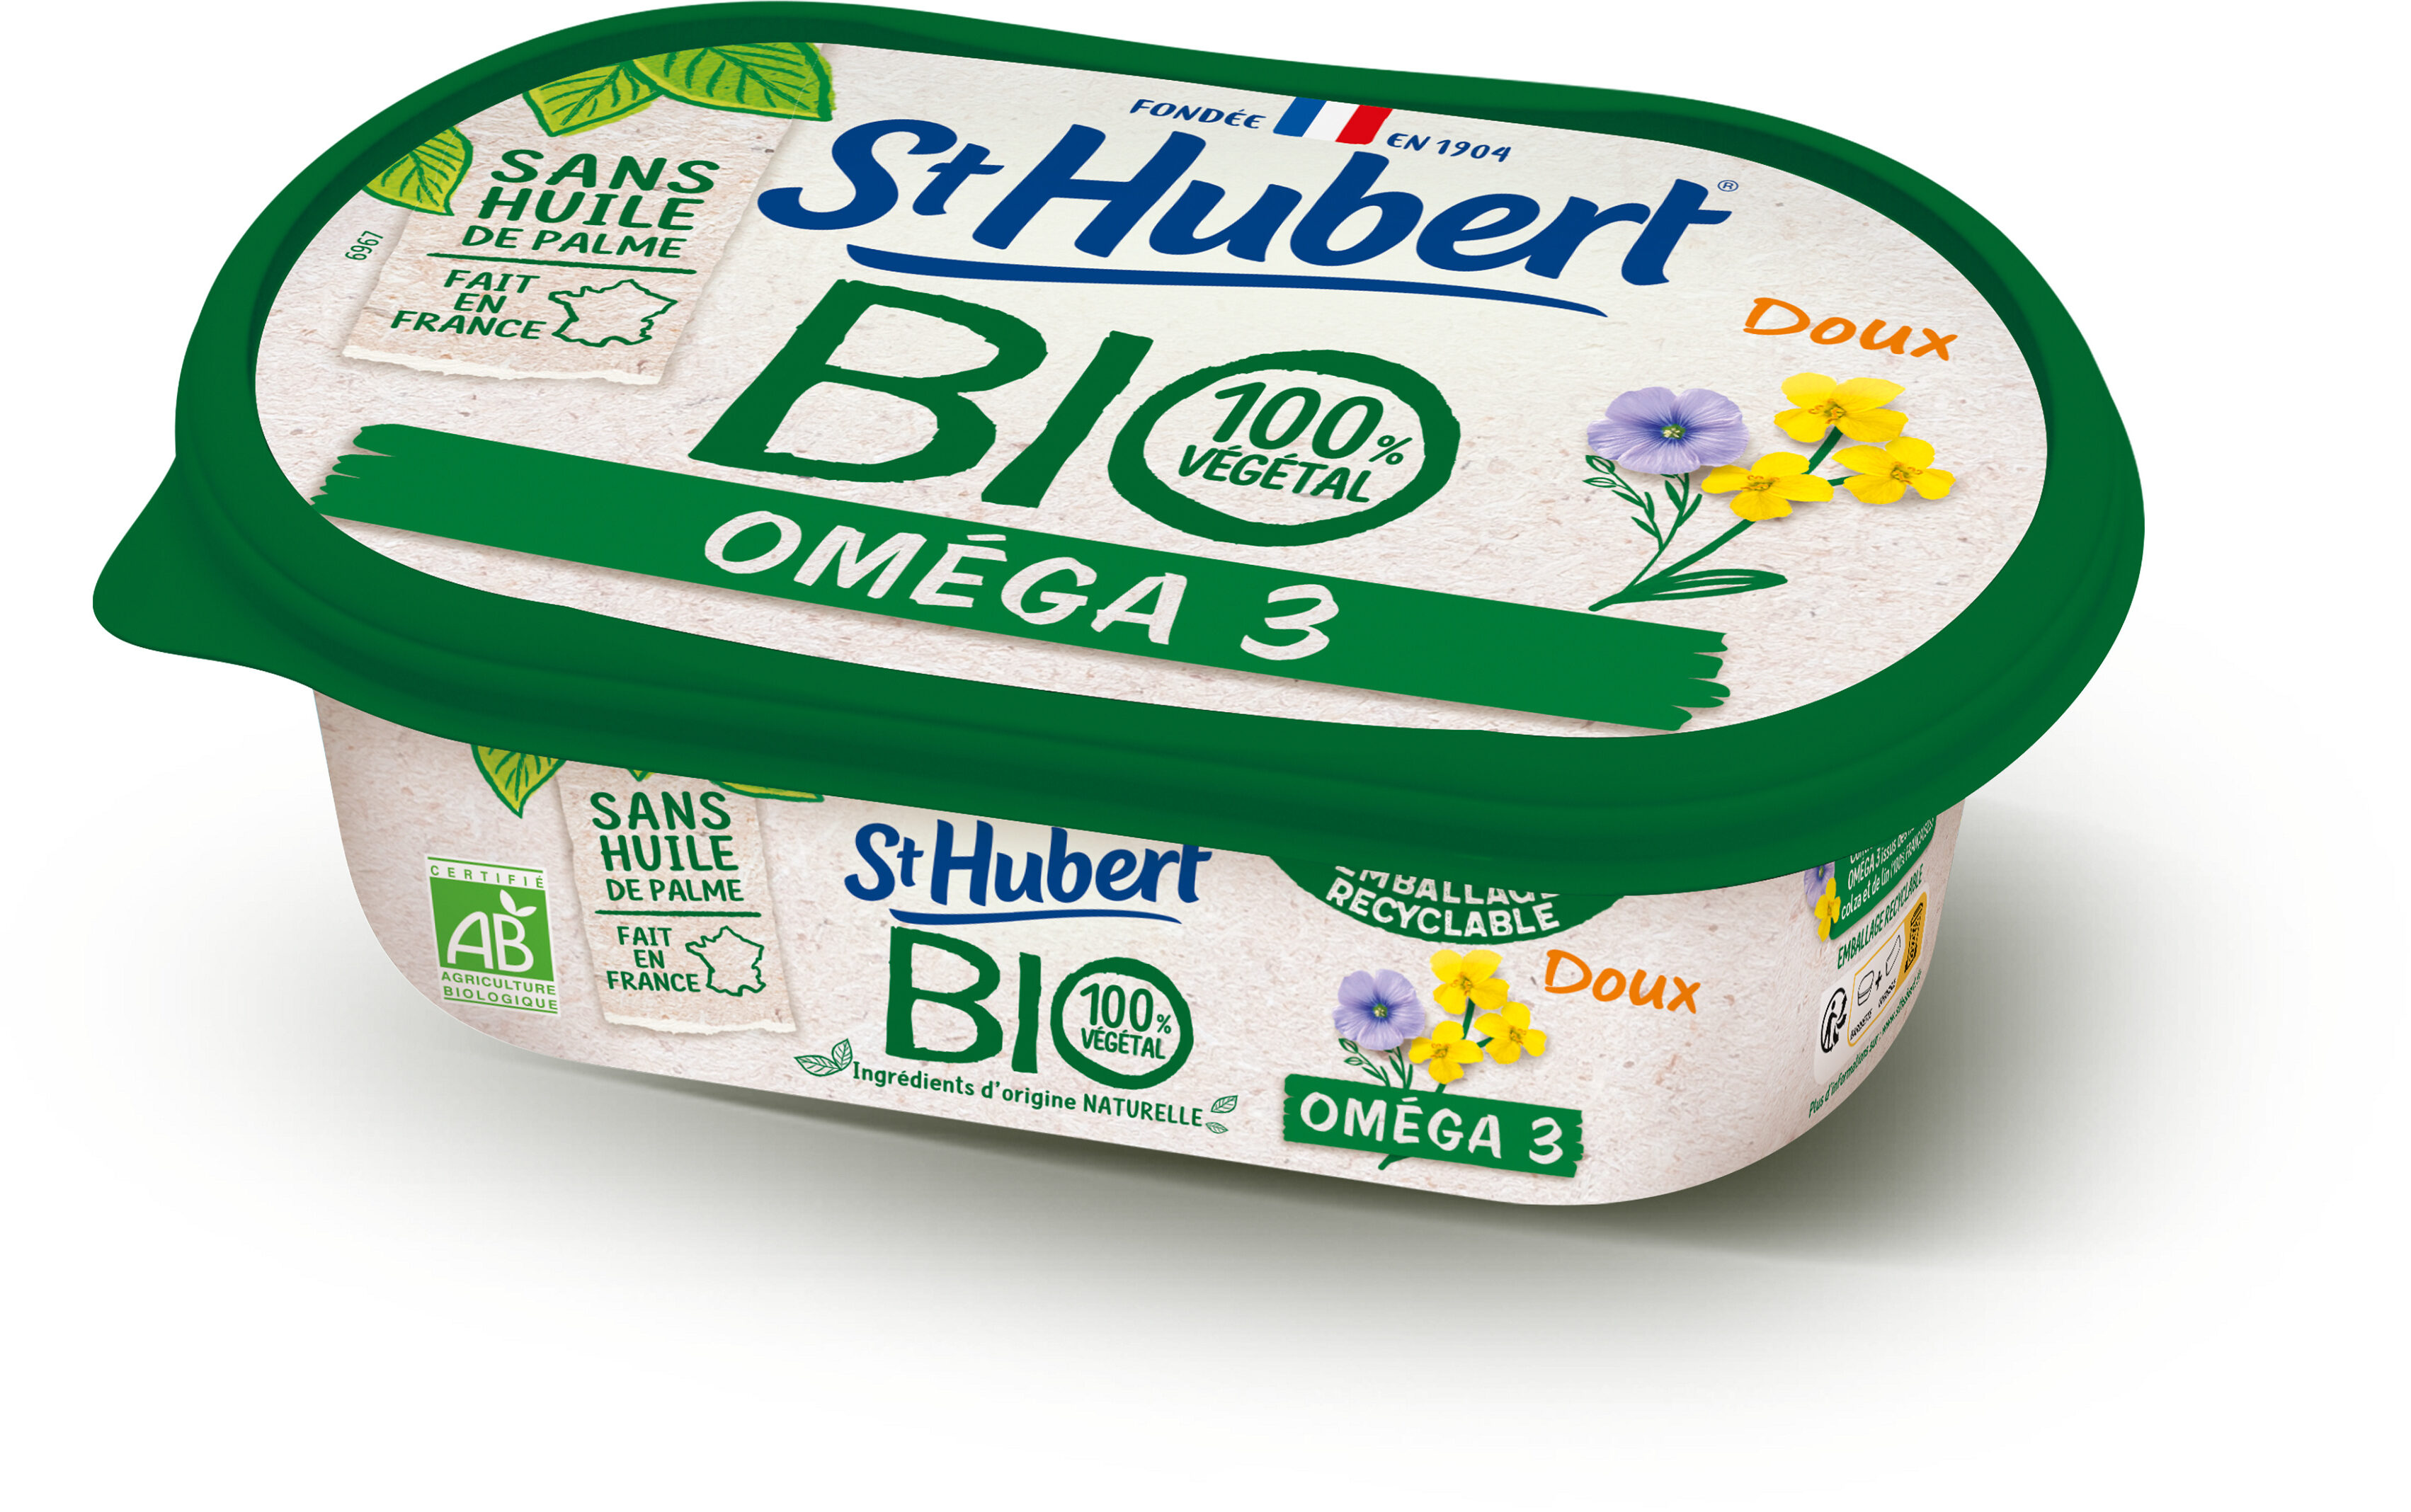 St hubert bio omega 3 230 g doux sans hdp - Produit